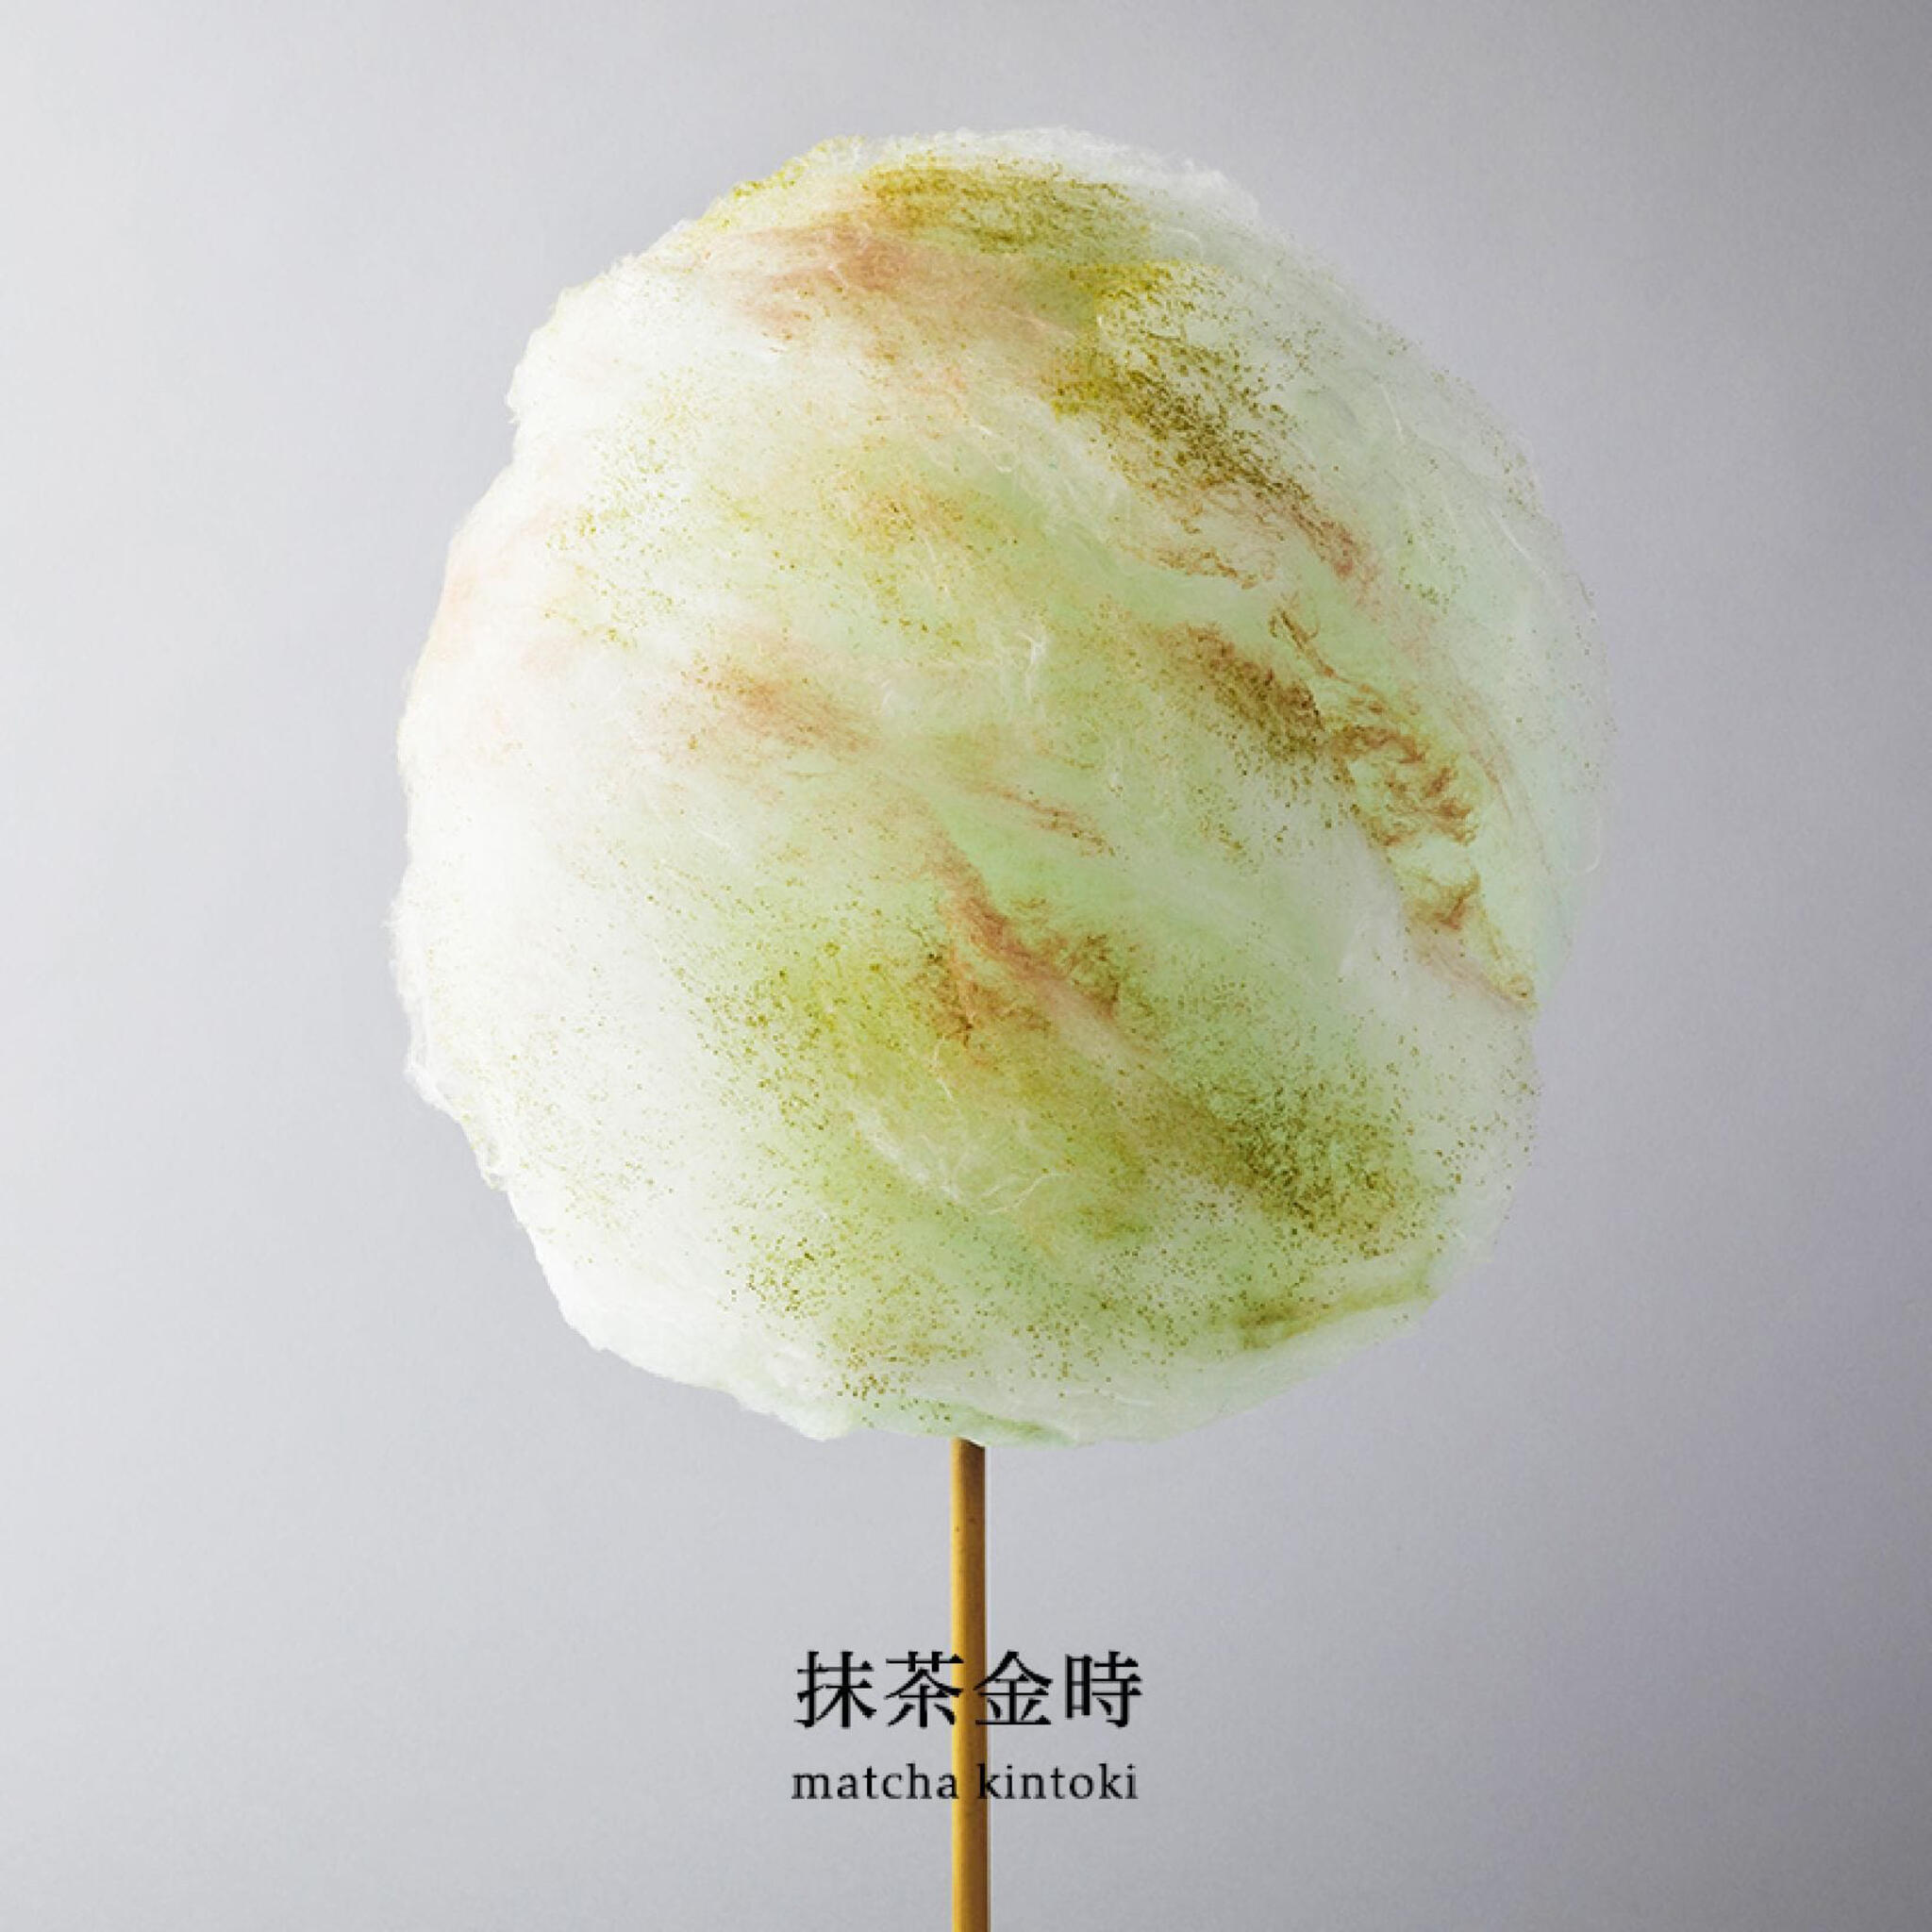 zarame -gourmet cotton candy- 京都タワーサンド店 - 京都市下京区東 